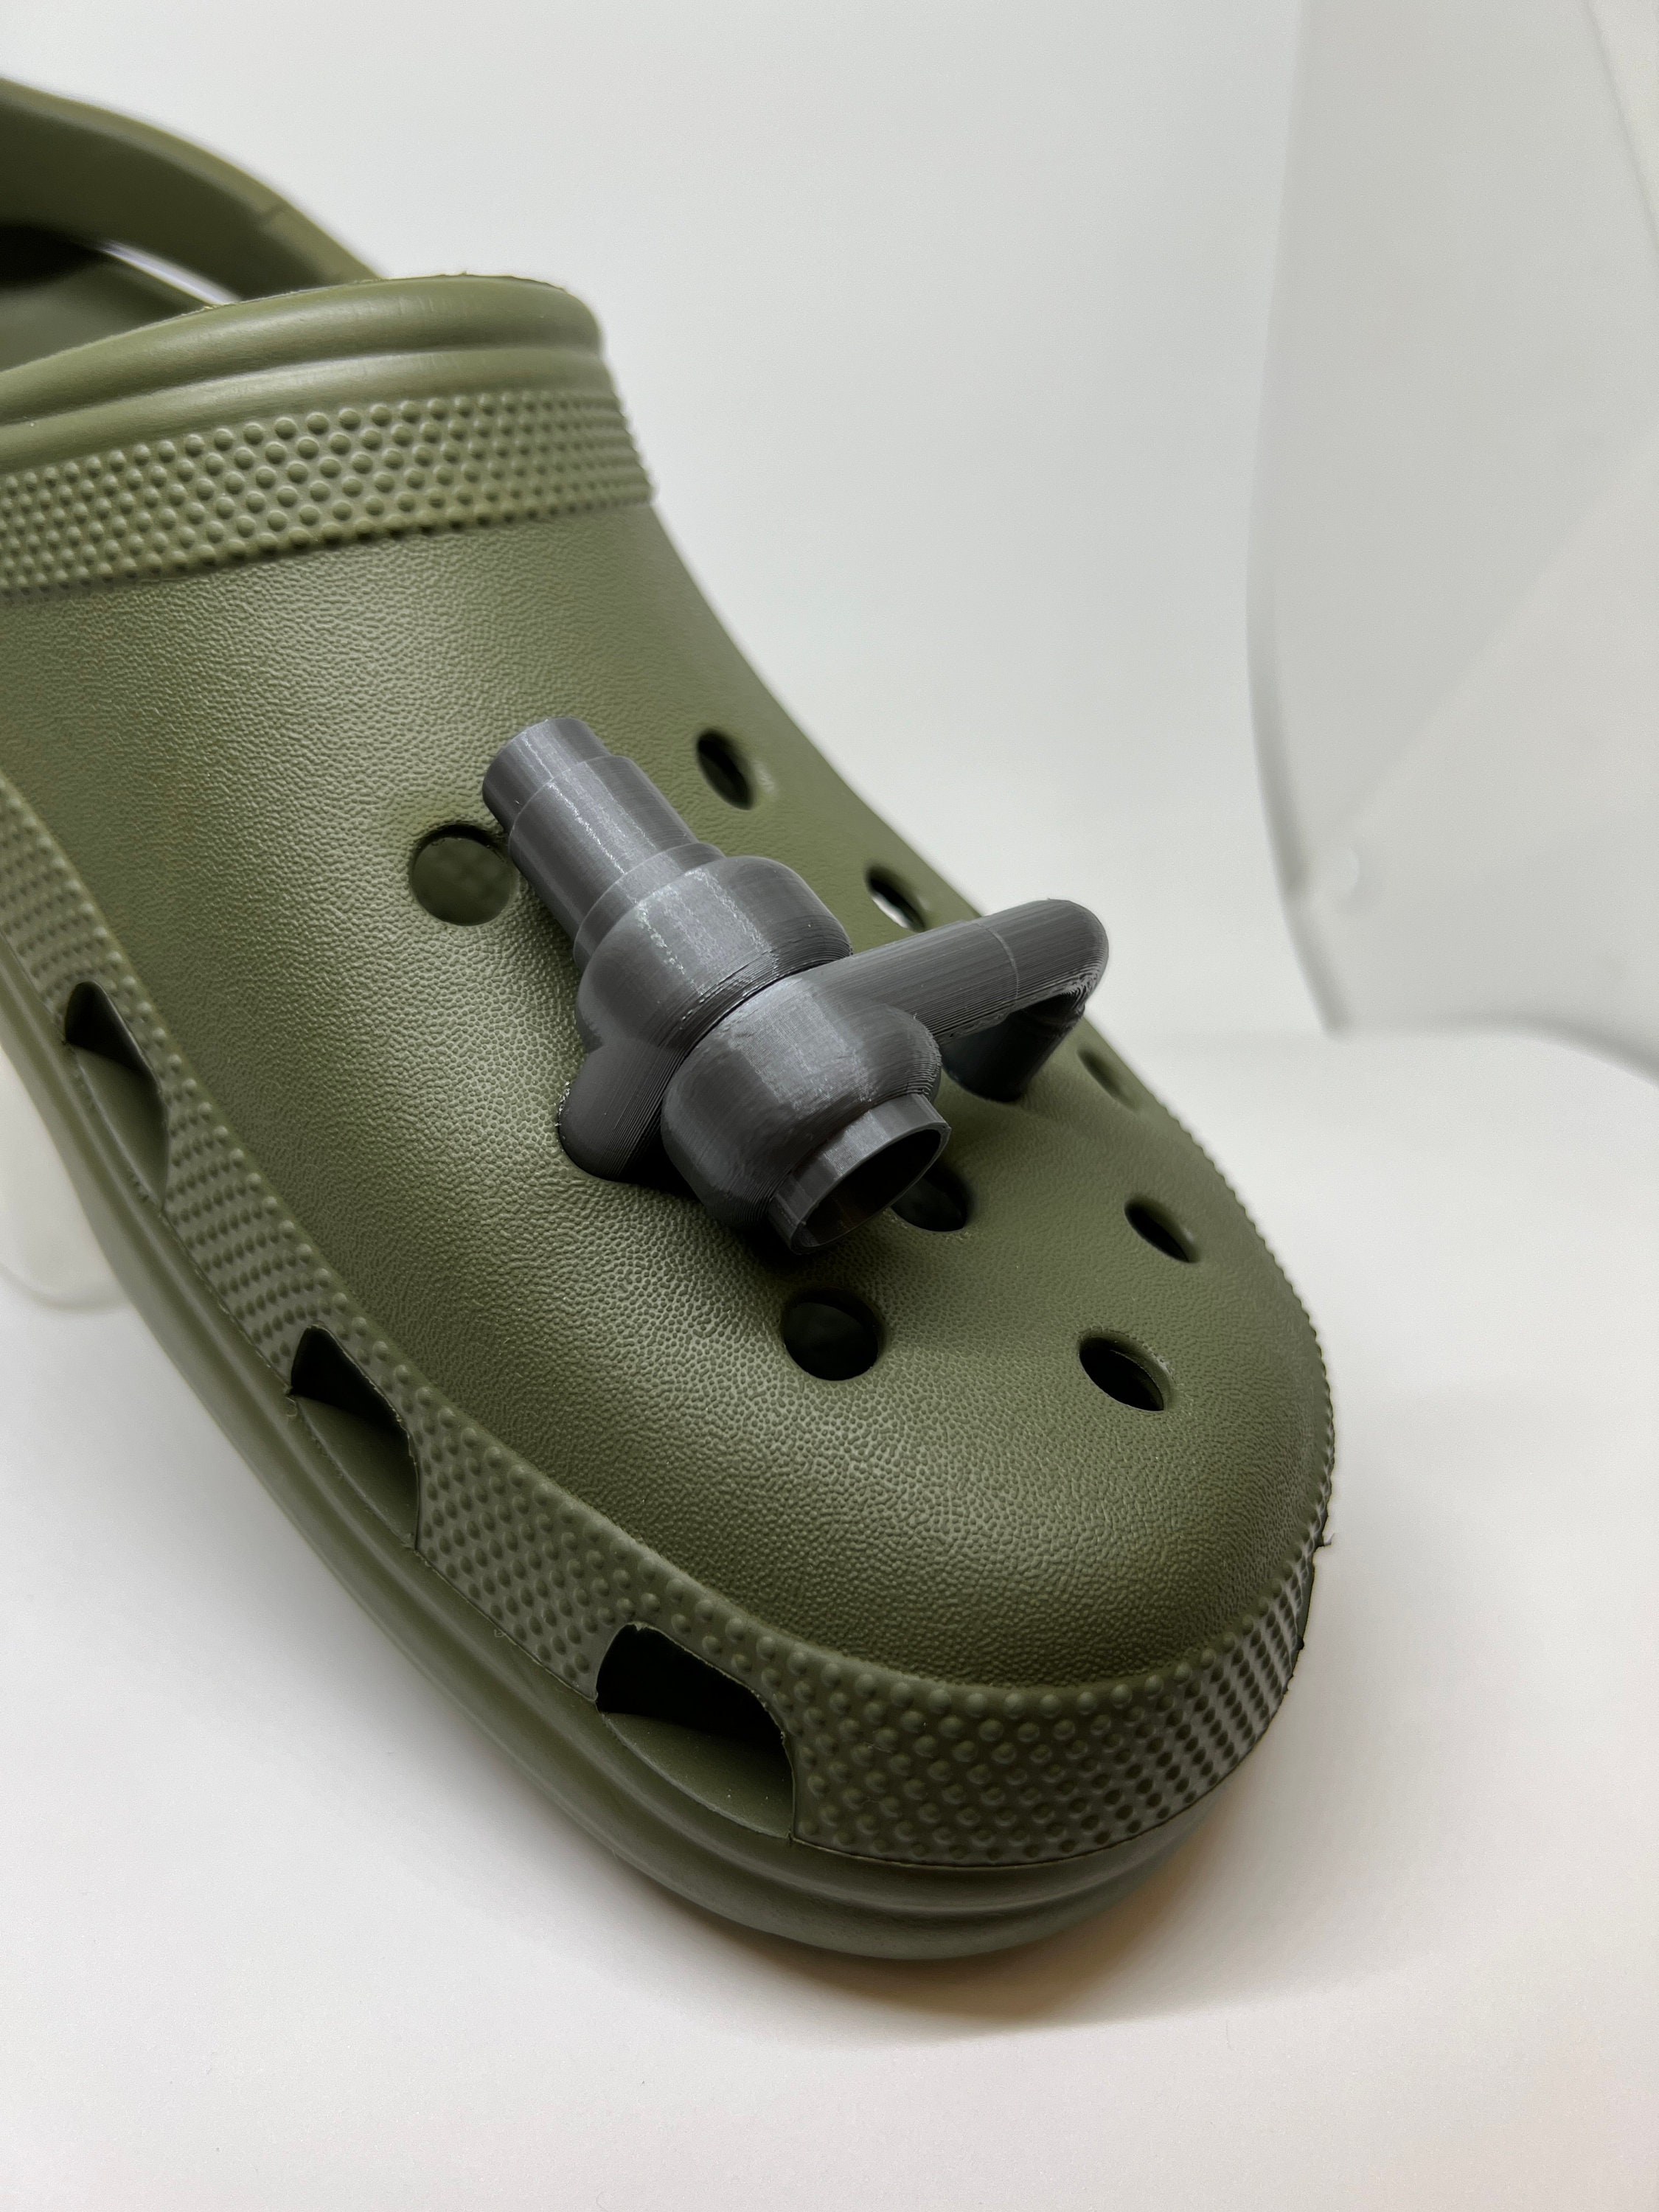 New Turbo Croc Attachment | Croc Jibbitz | Car Parts - FREE SHIPPING